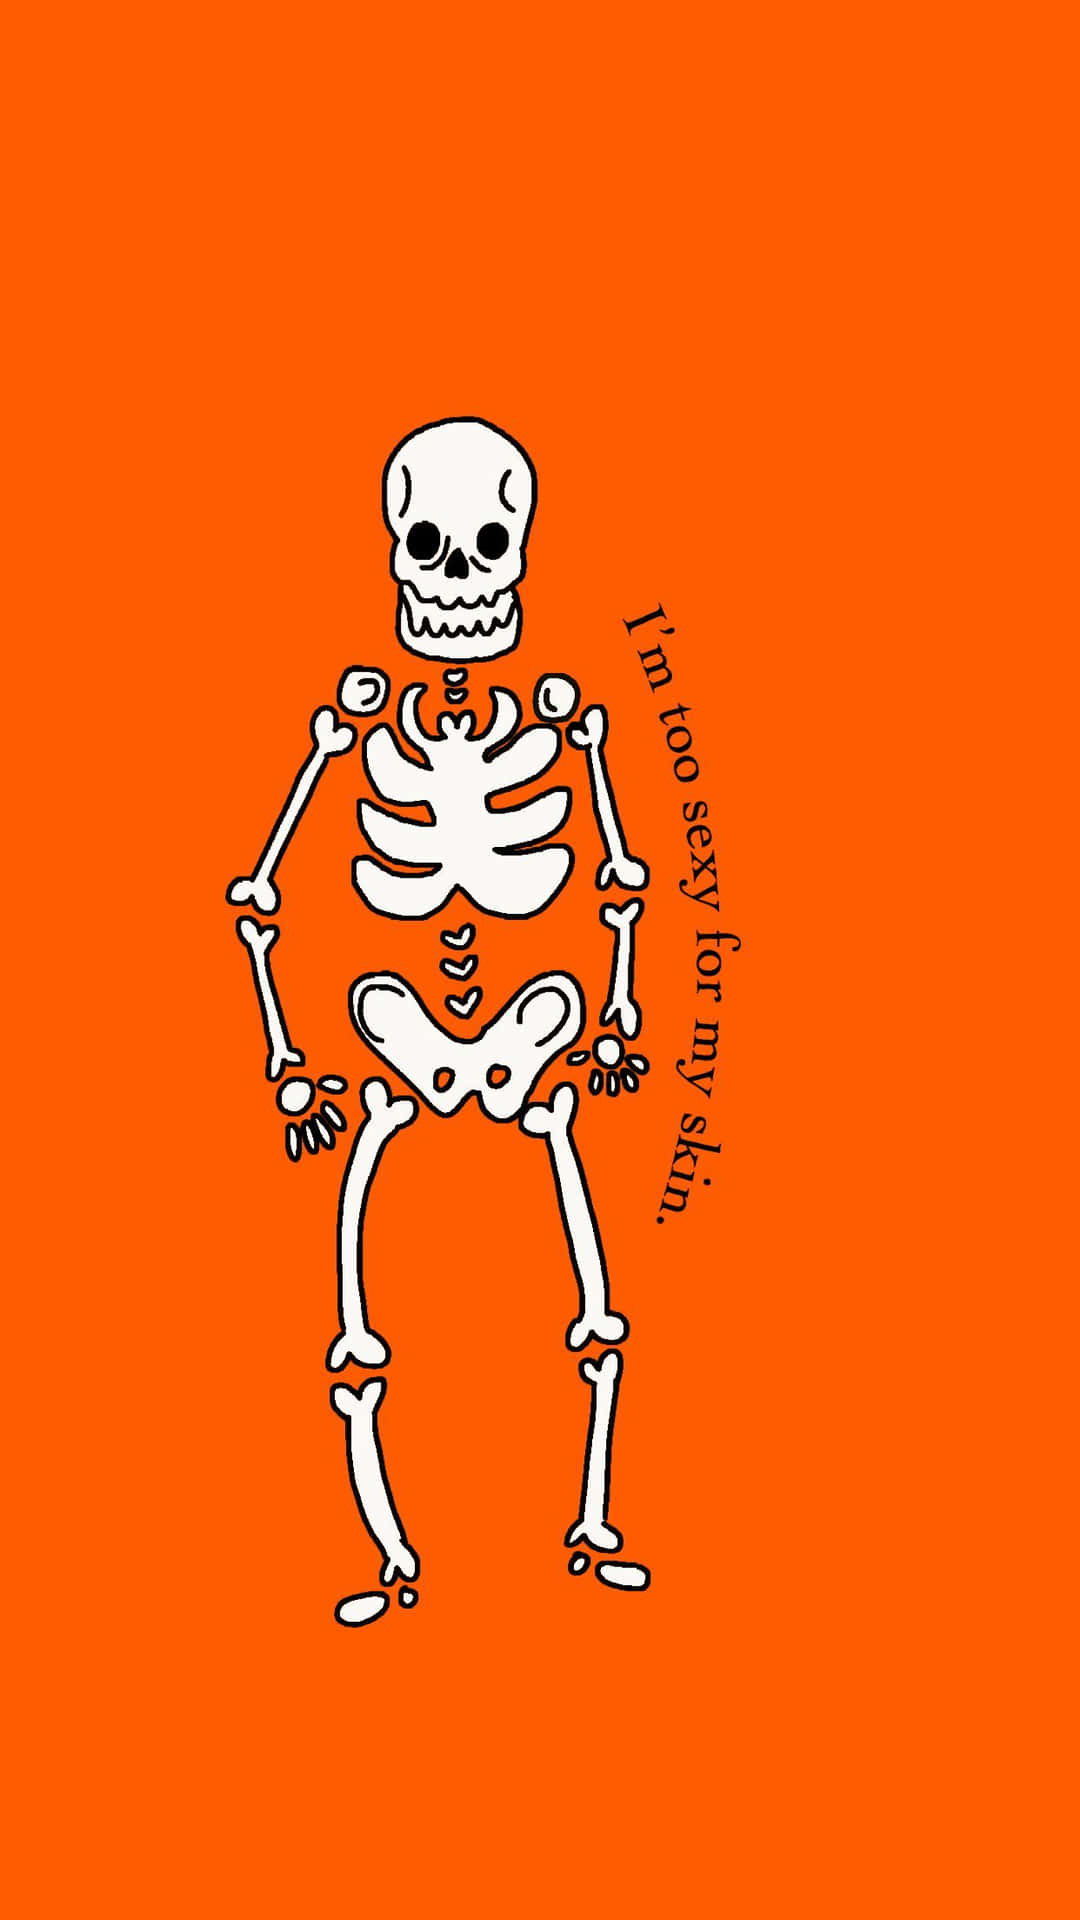 "A Spooky Halloween Skeleton Snap" Wallpaper